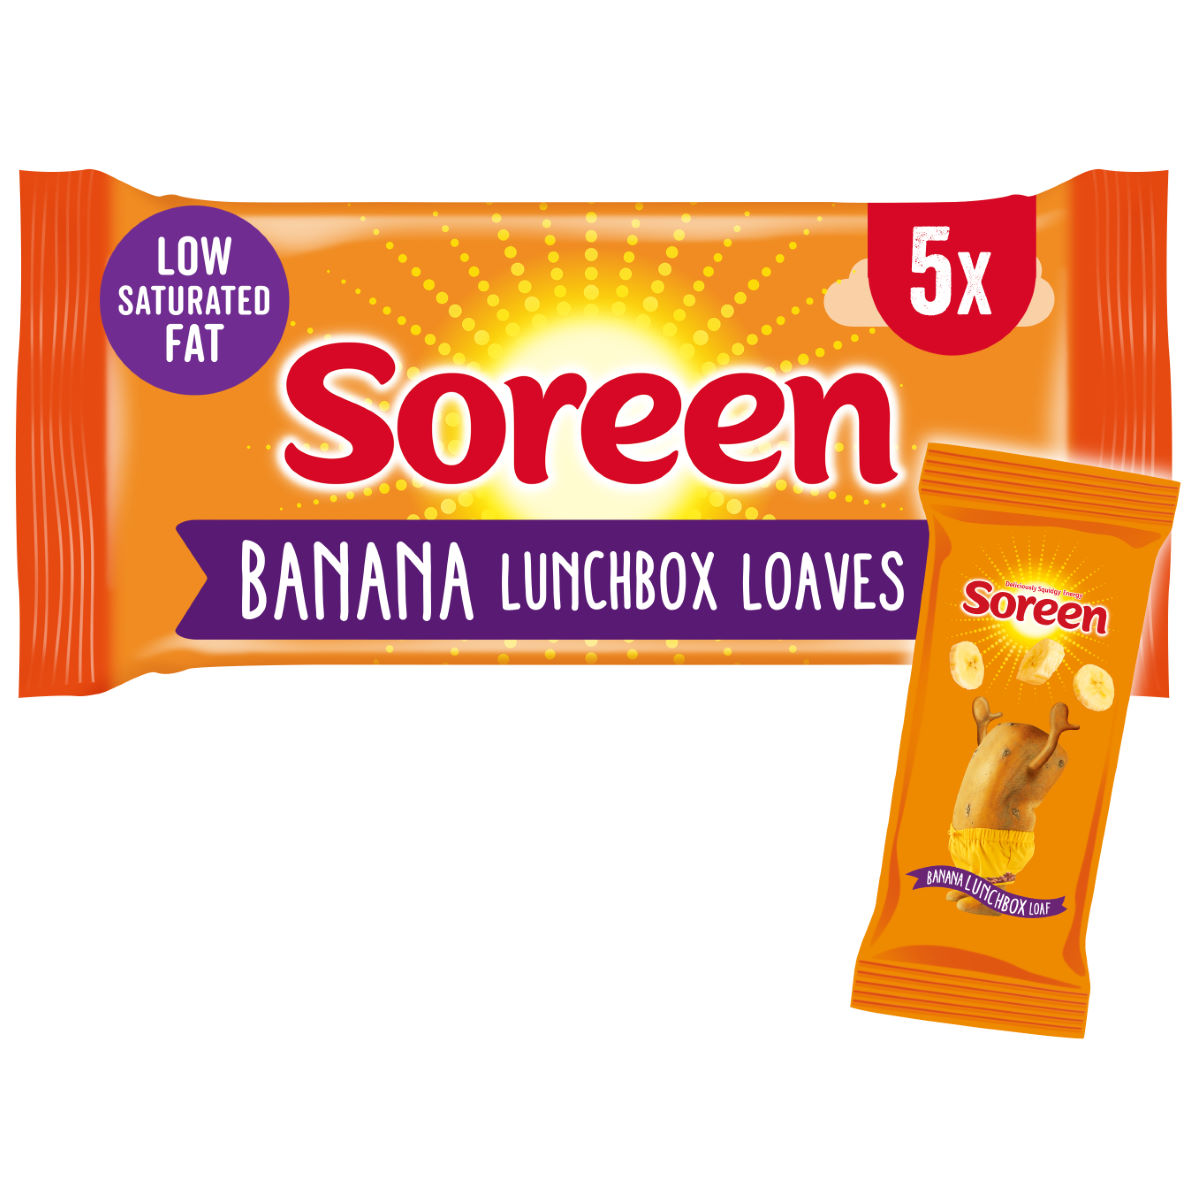 Barritas de pan dulce Soreen (5 x 30g) - Barritas